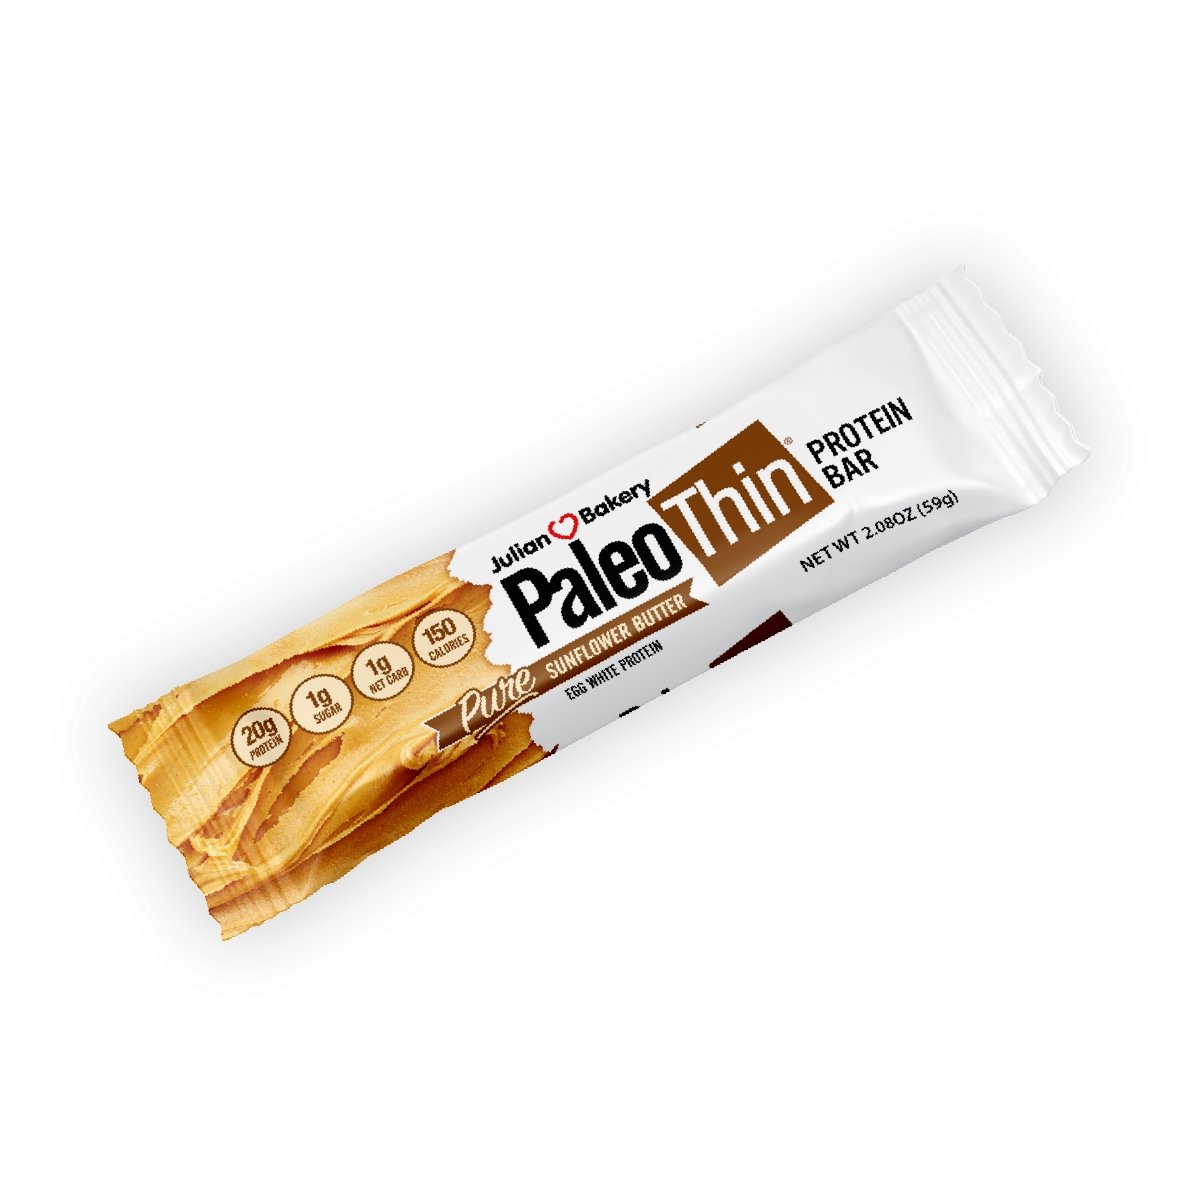 PaleoThin® Protein Bar Sunflower Butter - Julian Bakery